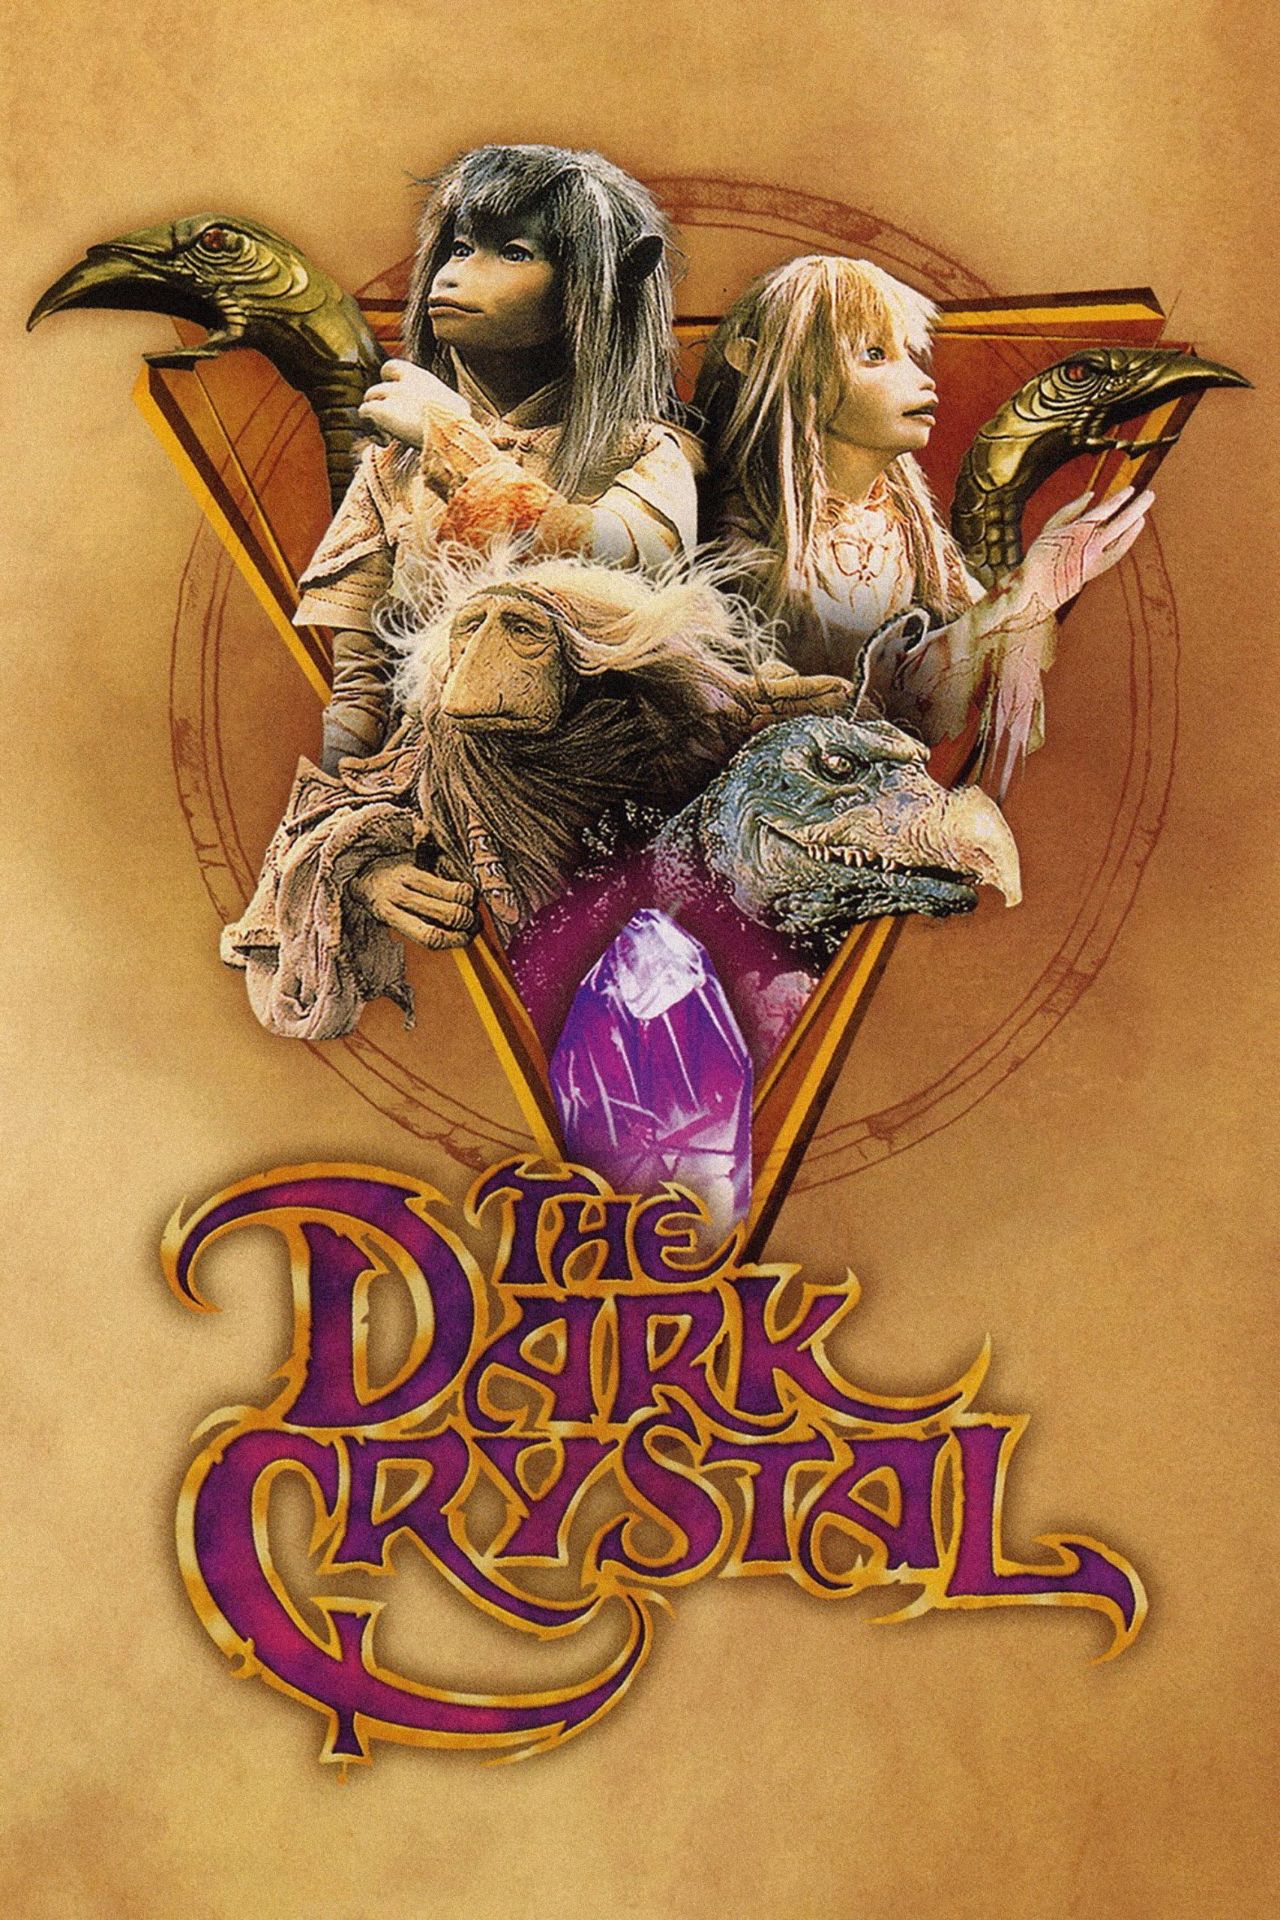 The Dark Crystal Movie Poster